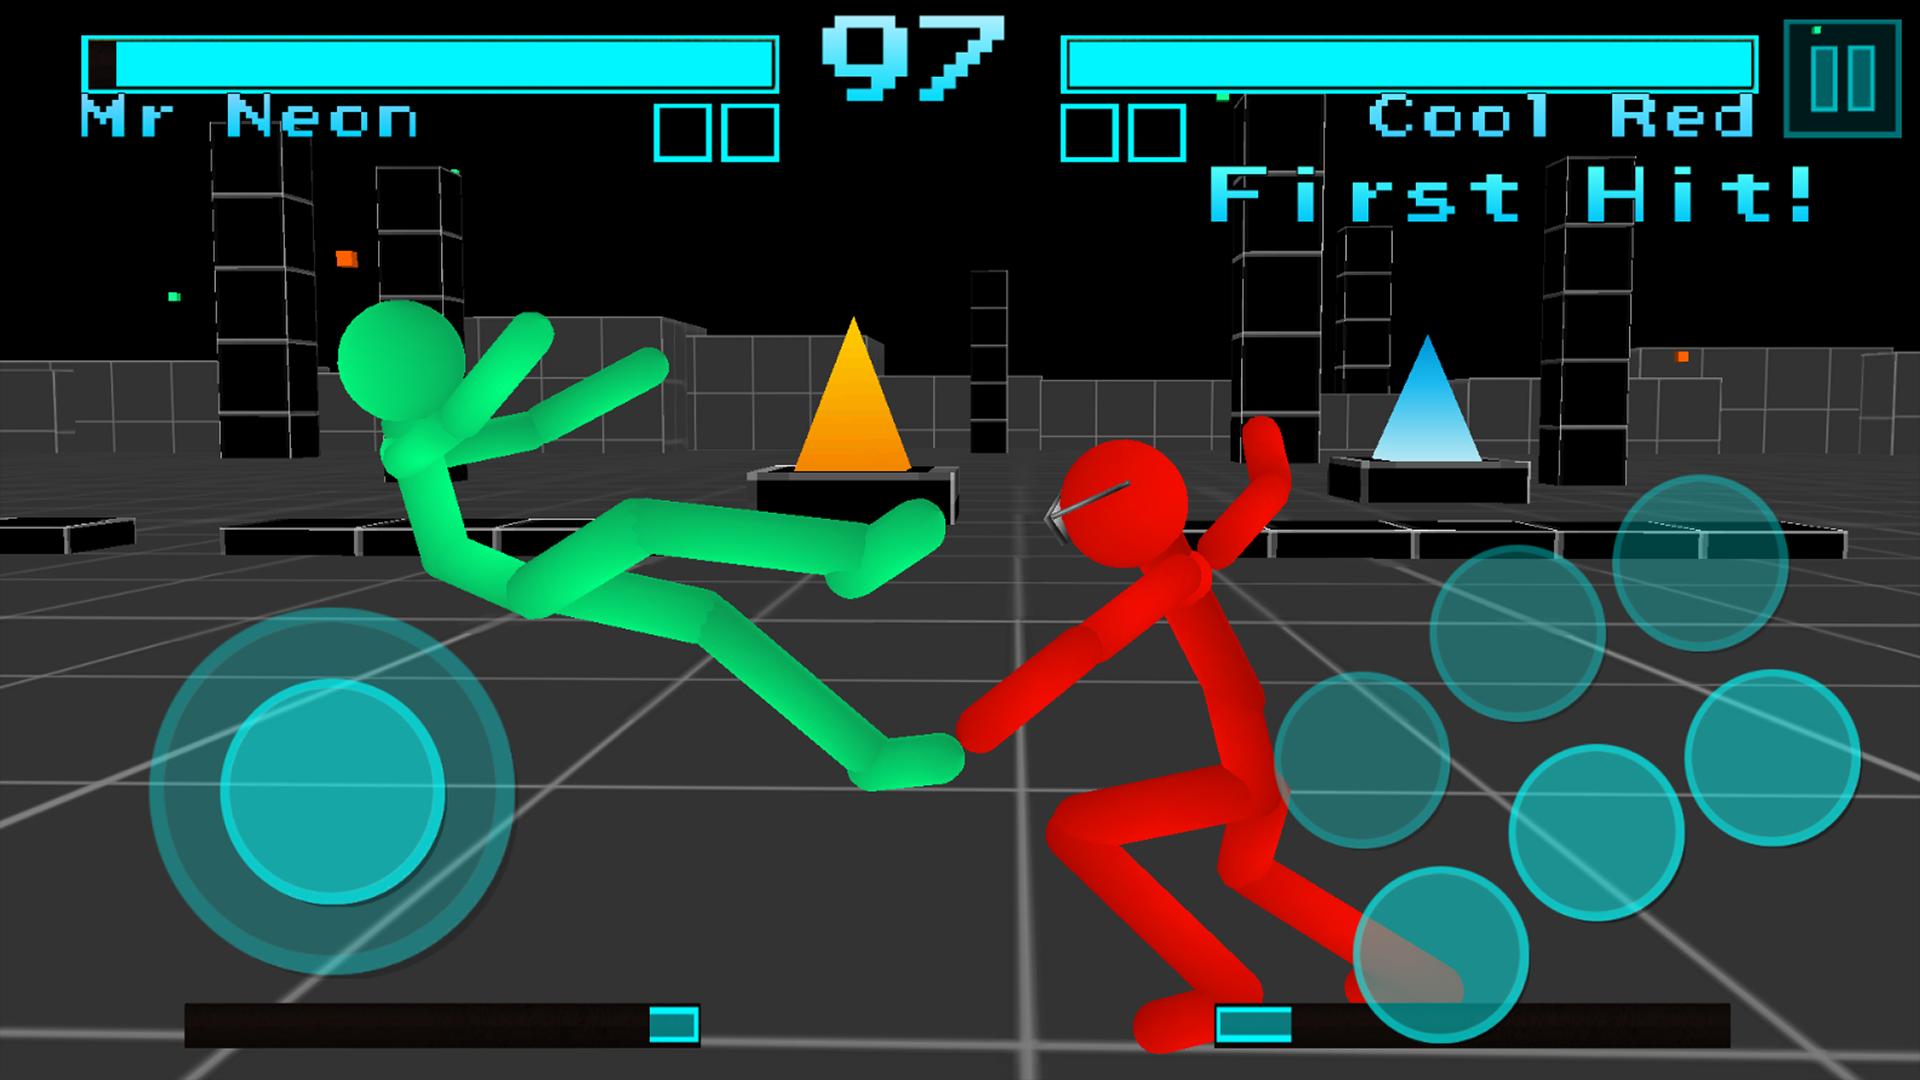 Stickman Fighting 3D - First Gameplay 